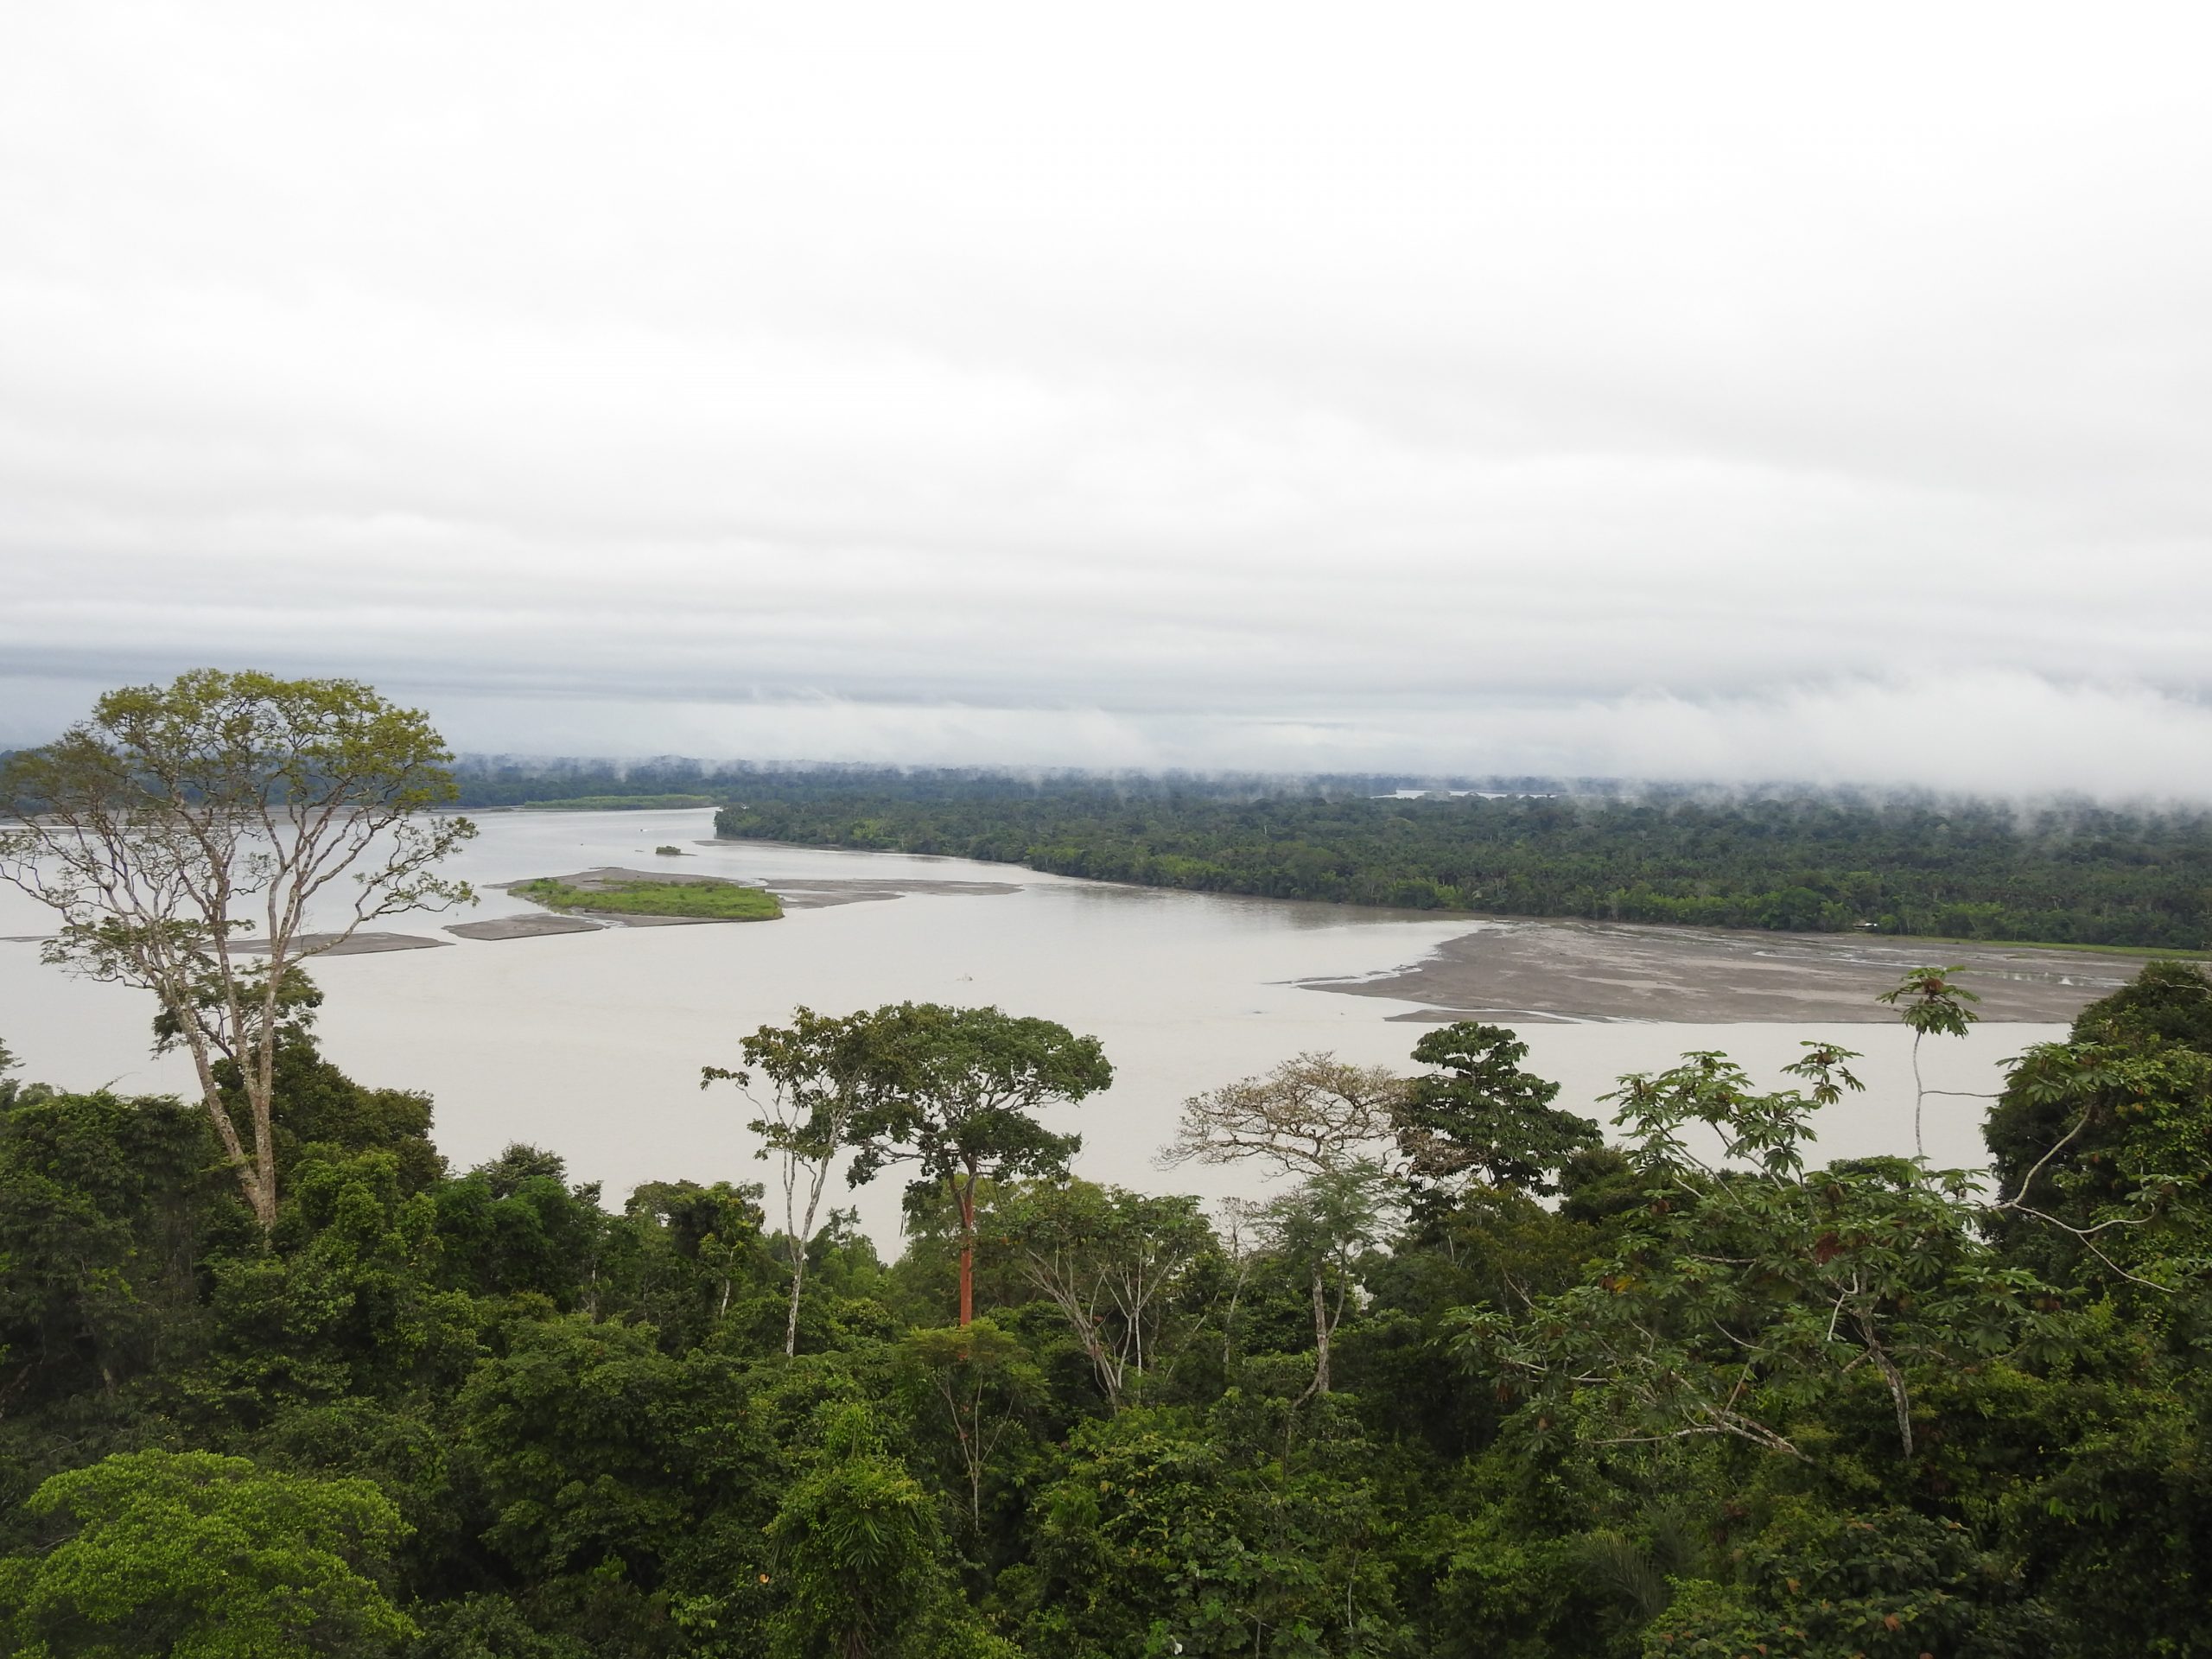 Experiencia amazónica Woaorani